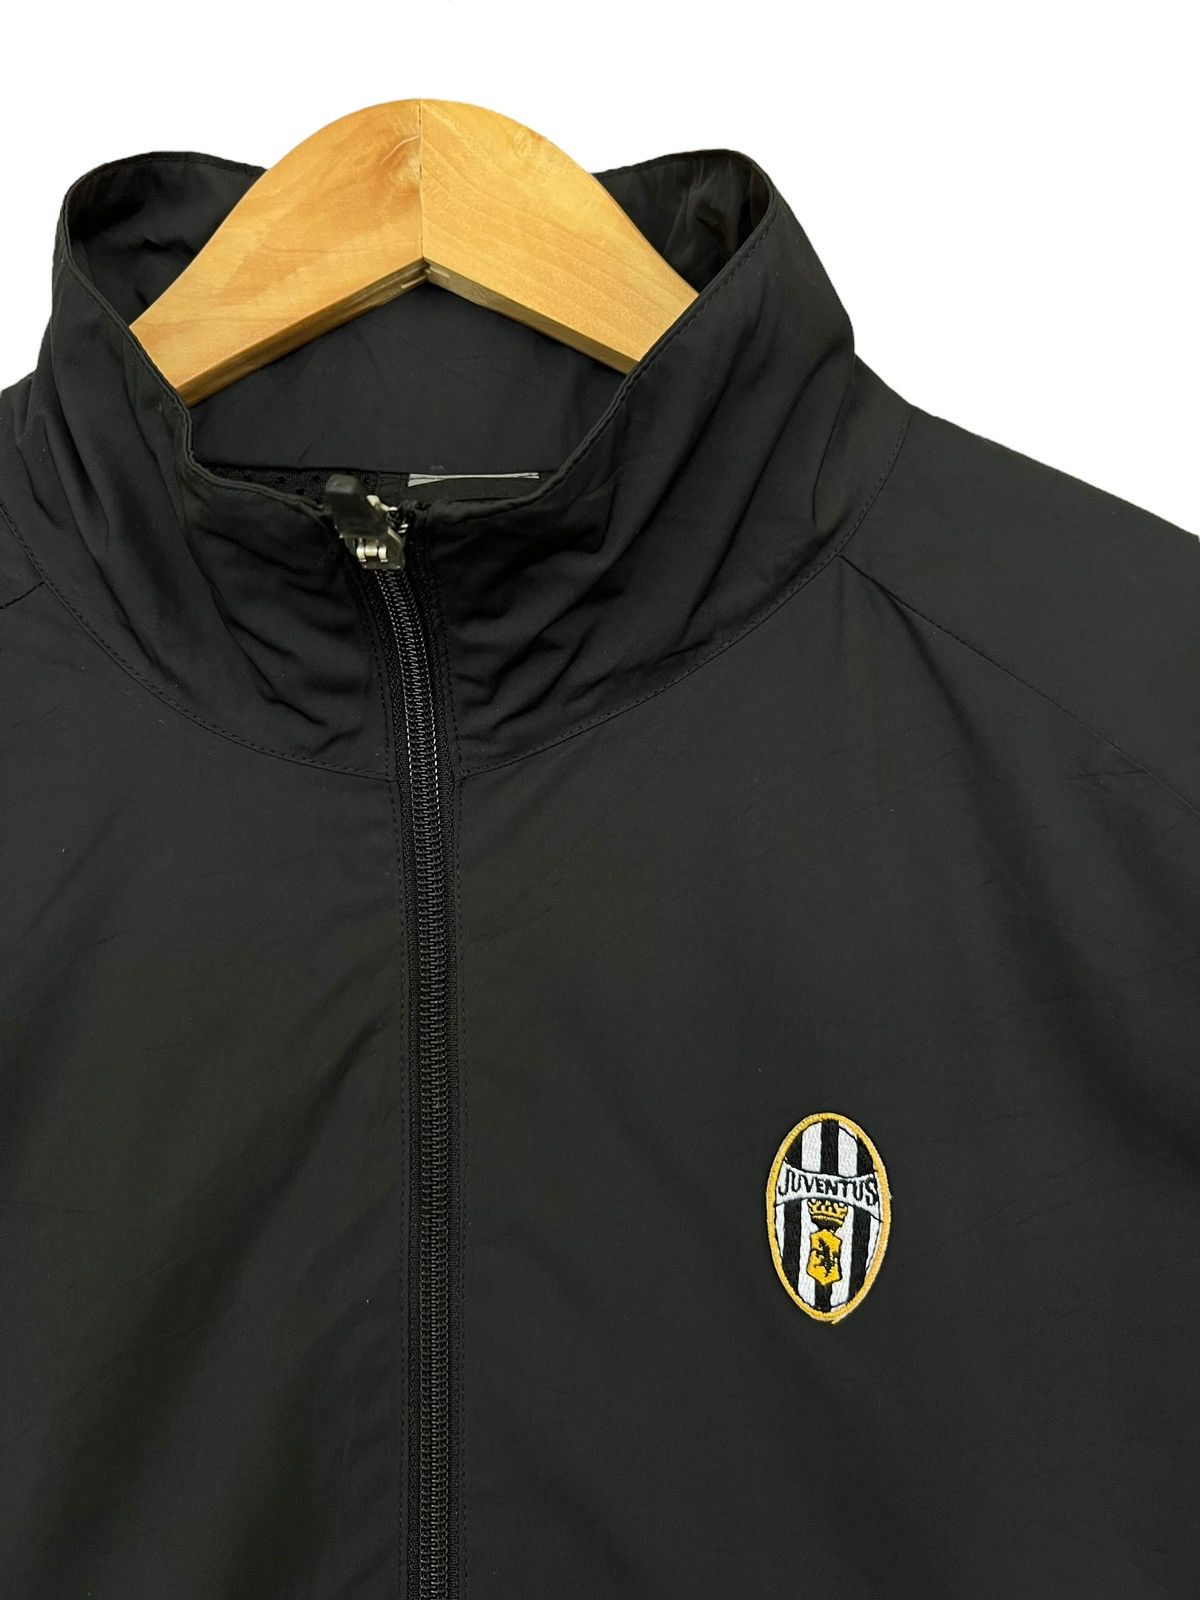 Vintage 2000s Nike Juventus Football Soccer Training Jacket - 2